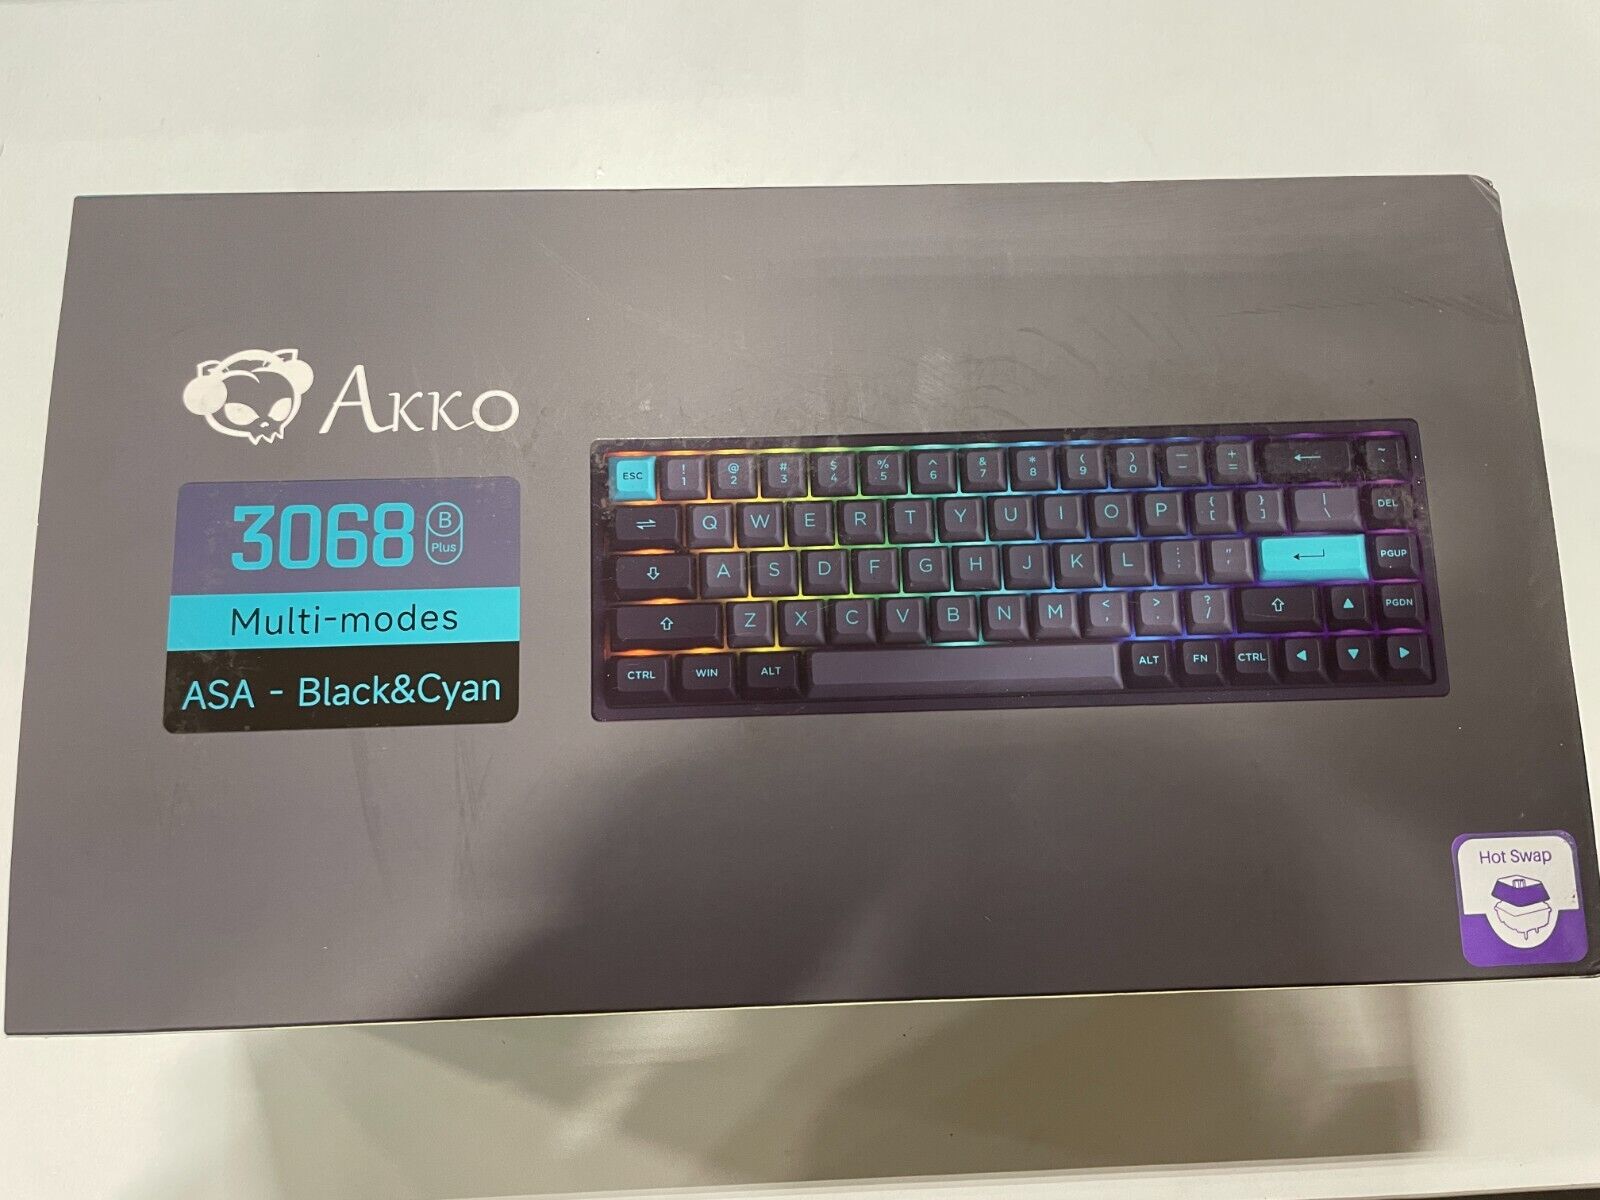 Akko Keyboard 3068 B Plus - Multi-modes